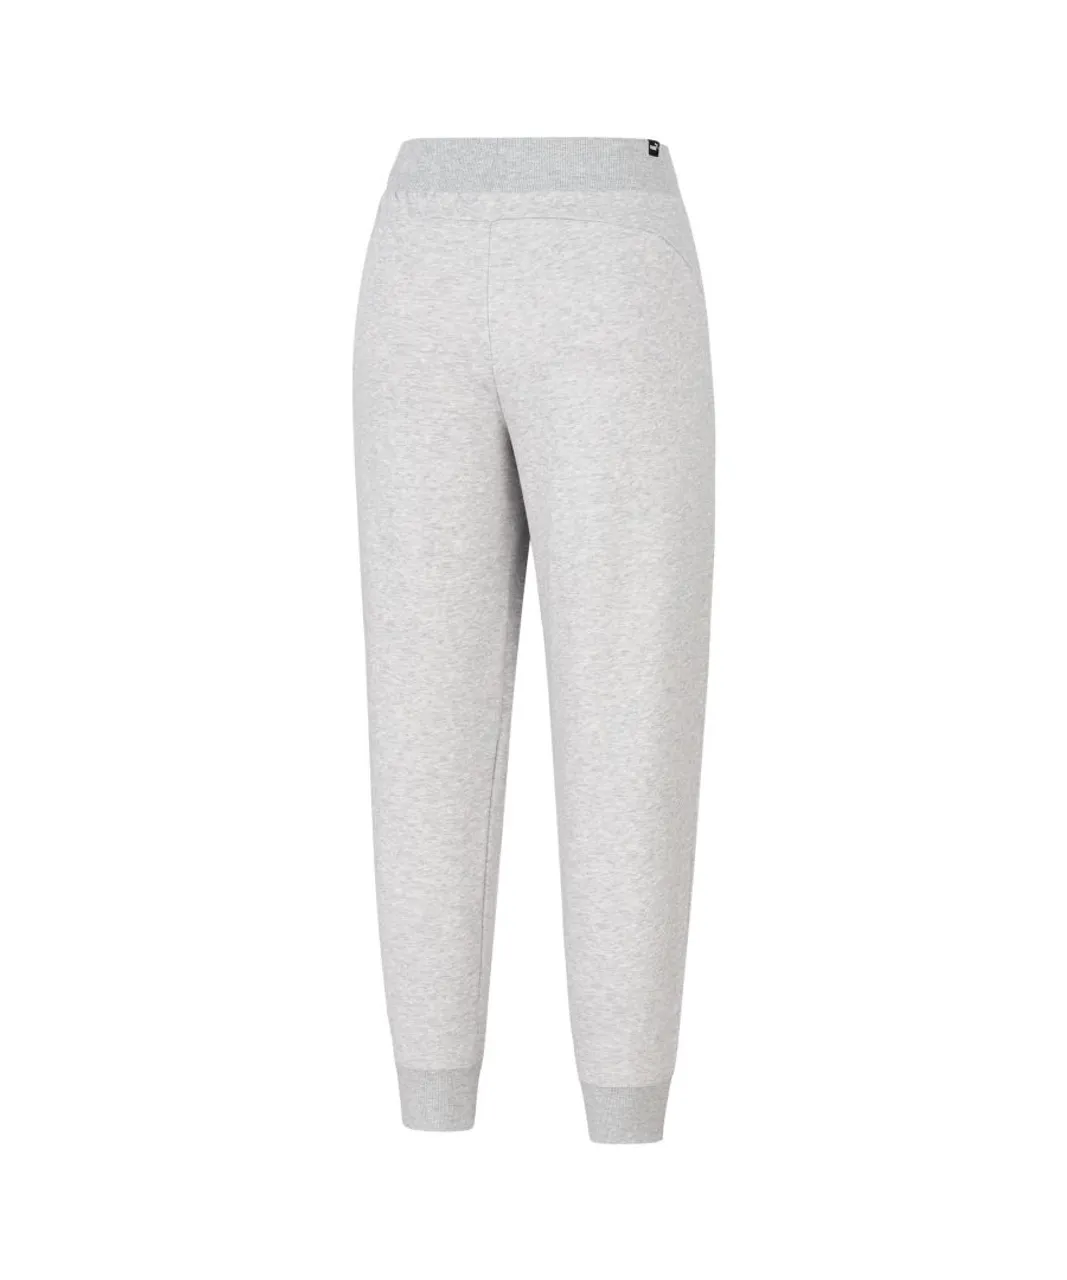 Puma Womens Essentials Full-Length Closed Sweatpants Jogging Bottoms - Grey Cotton